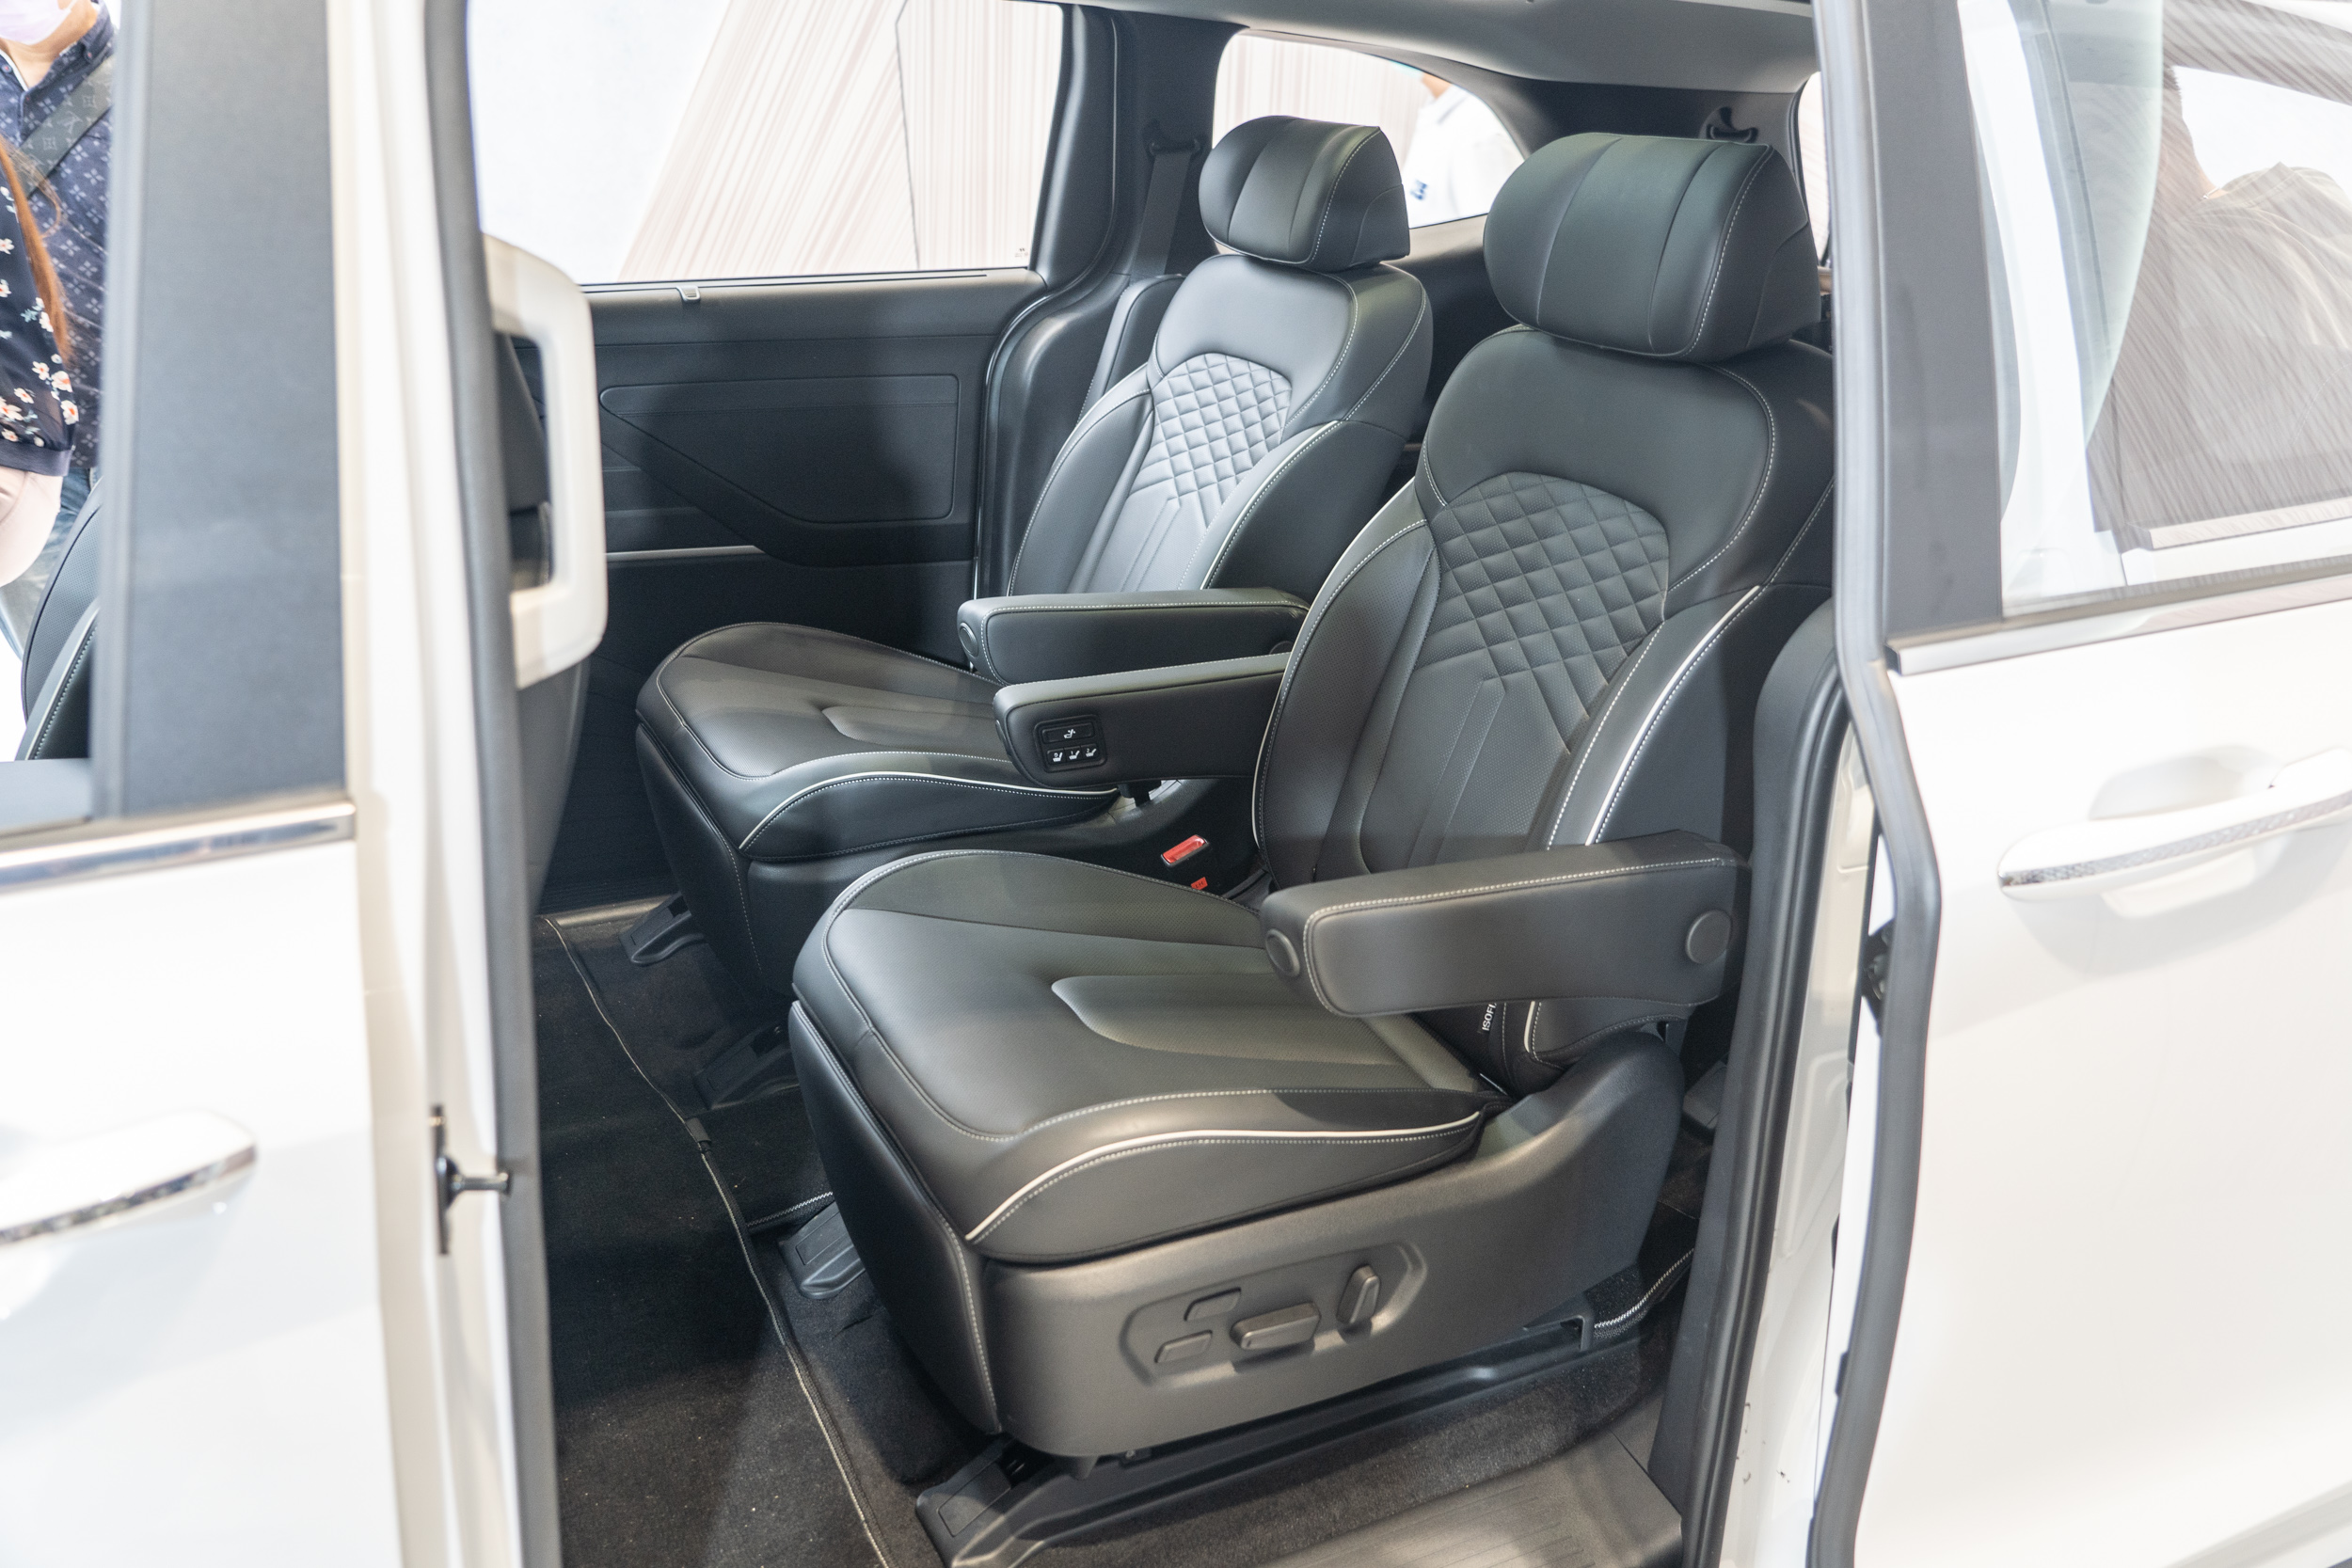 GLT-B 車型第二排 VIP 座椅具有電動調整/加熱/通風/電動腿靠功能。